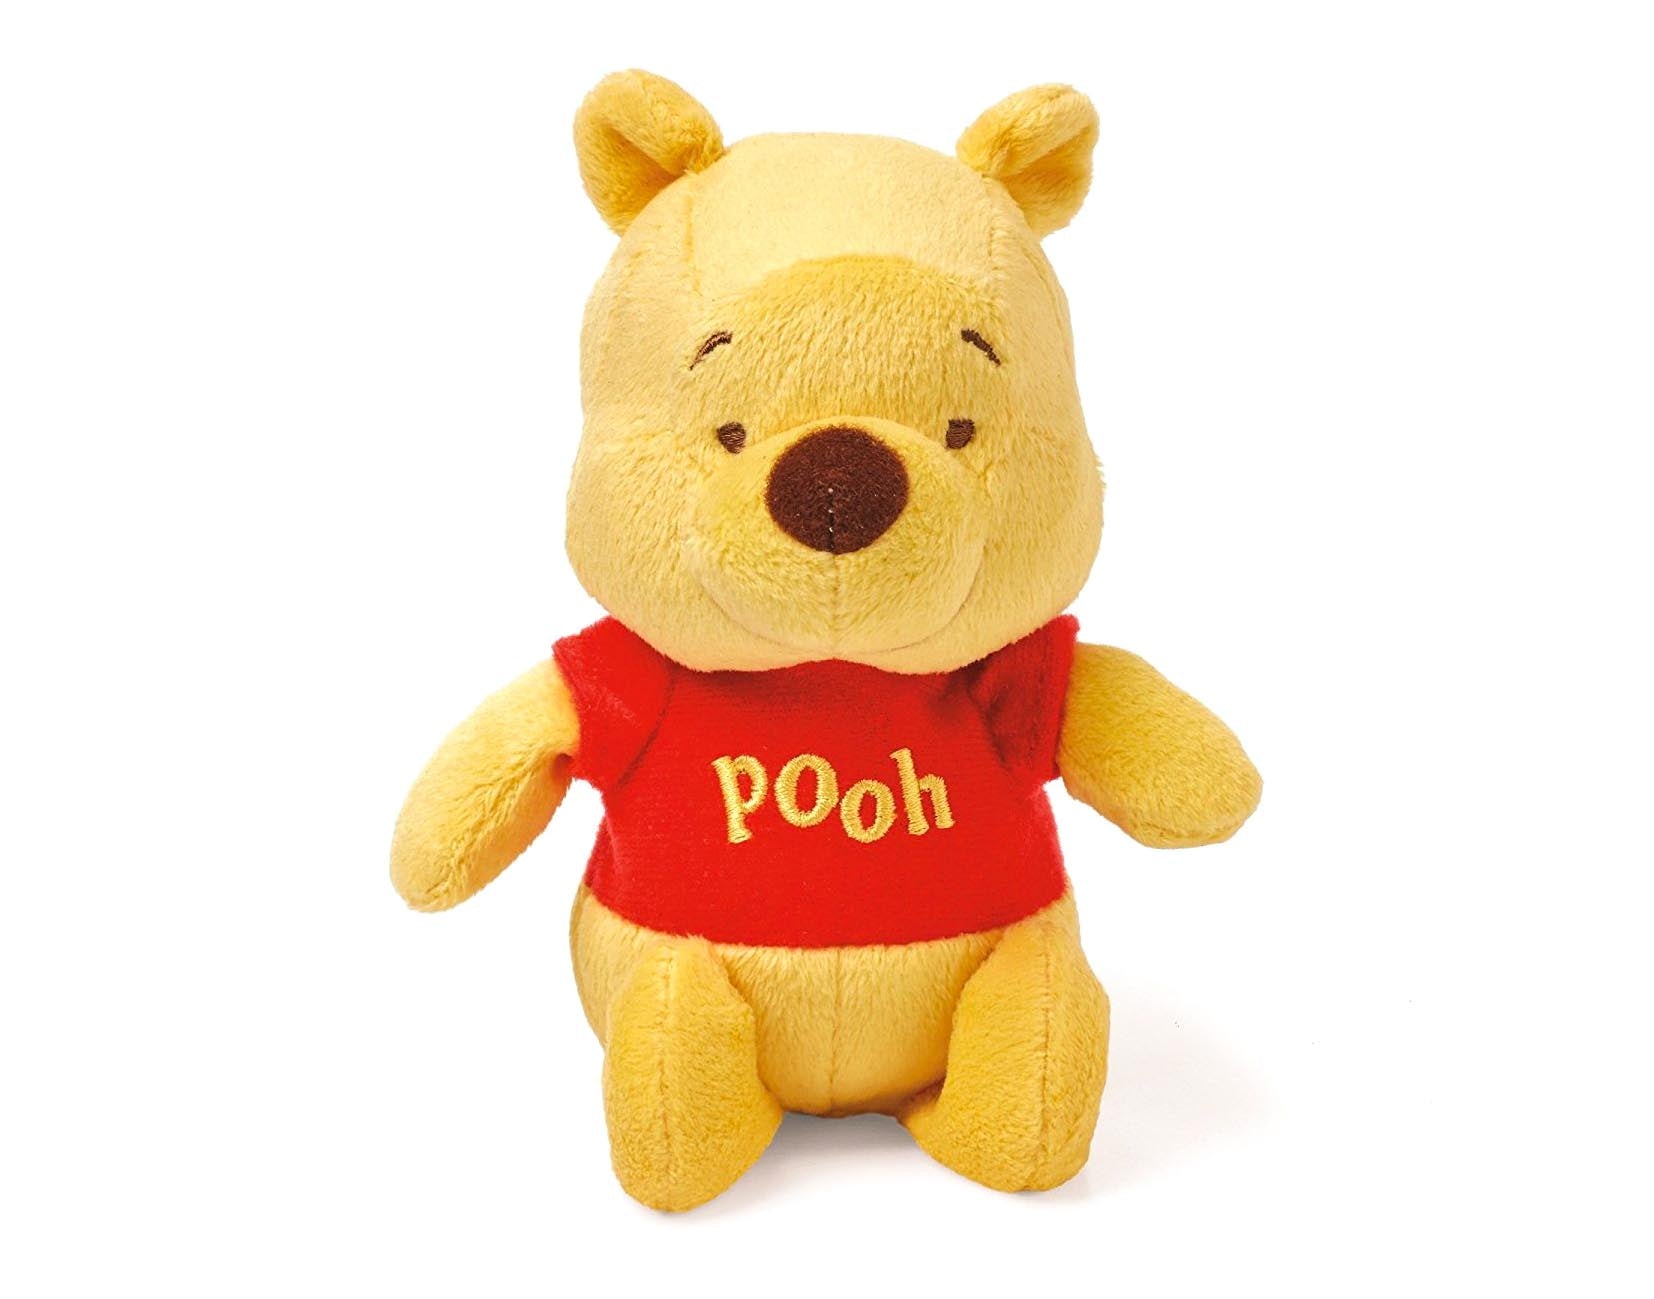 winnie the pooh baby plush